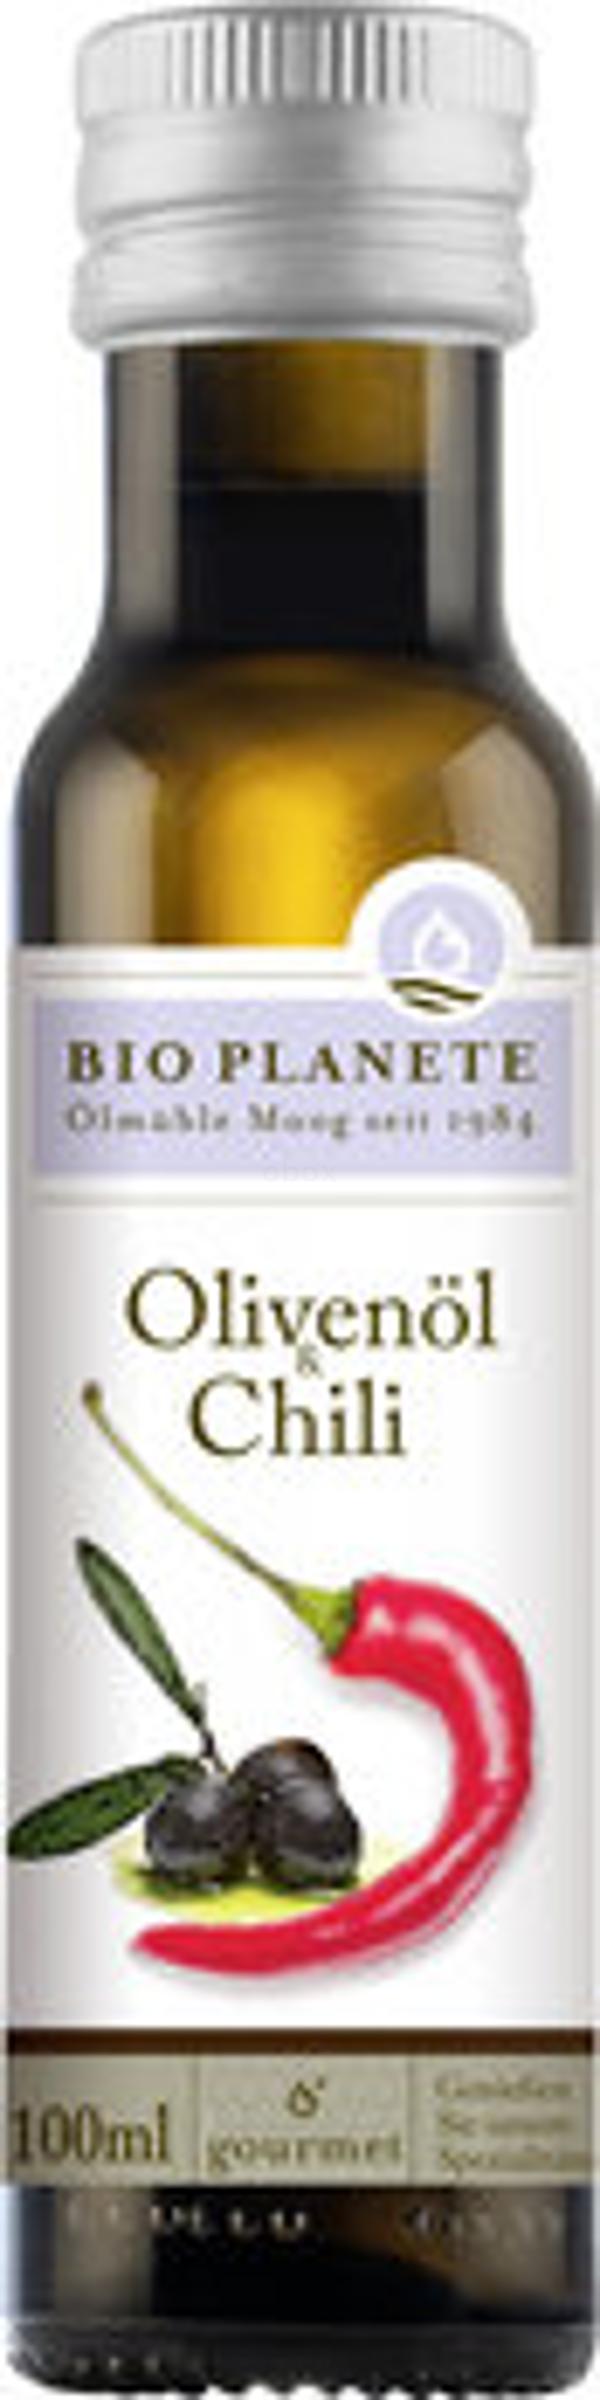 Produktfoto zu Olivenöl & Chili